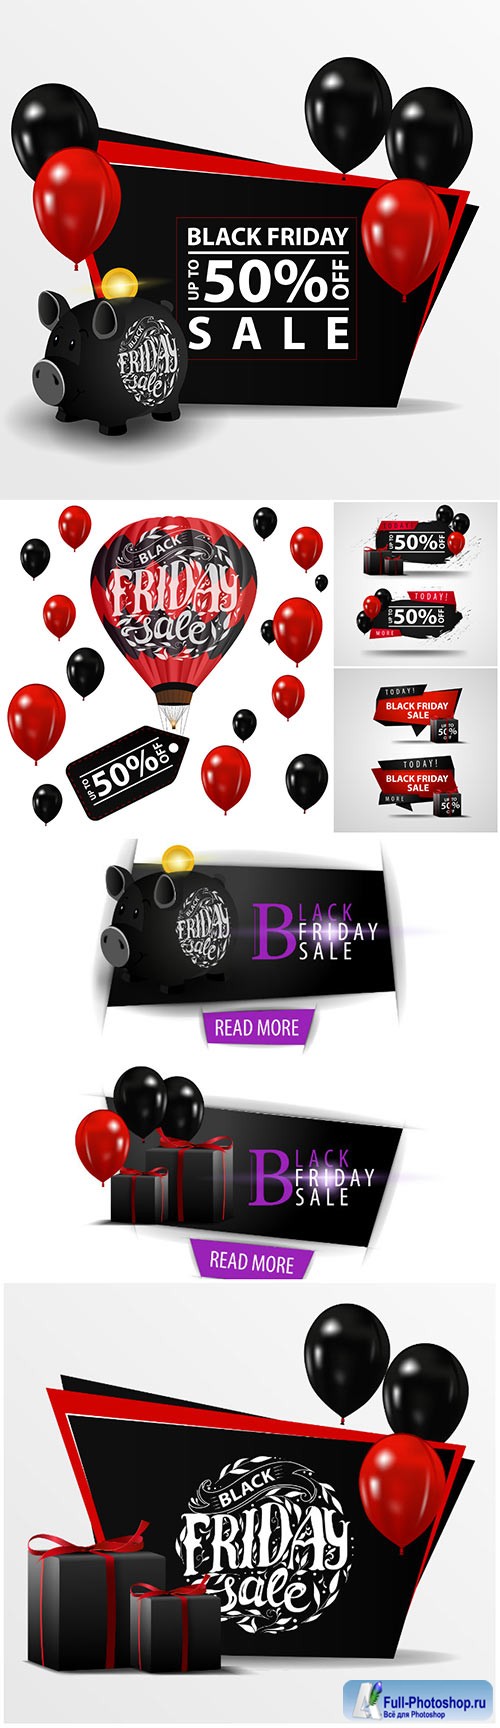 Black Friday sale vector banner with black piggy bank